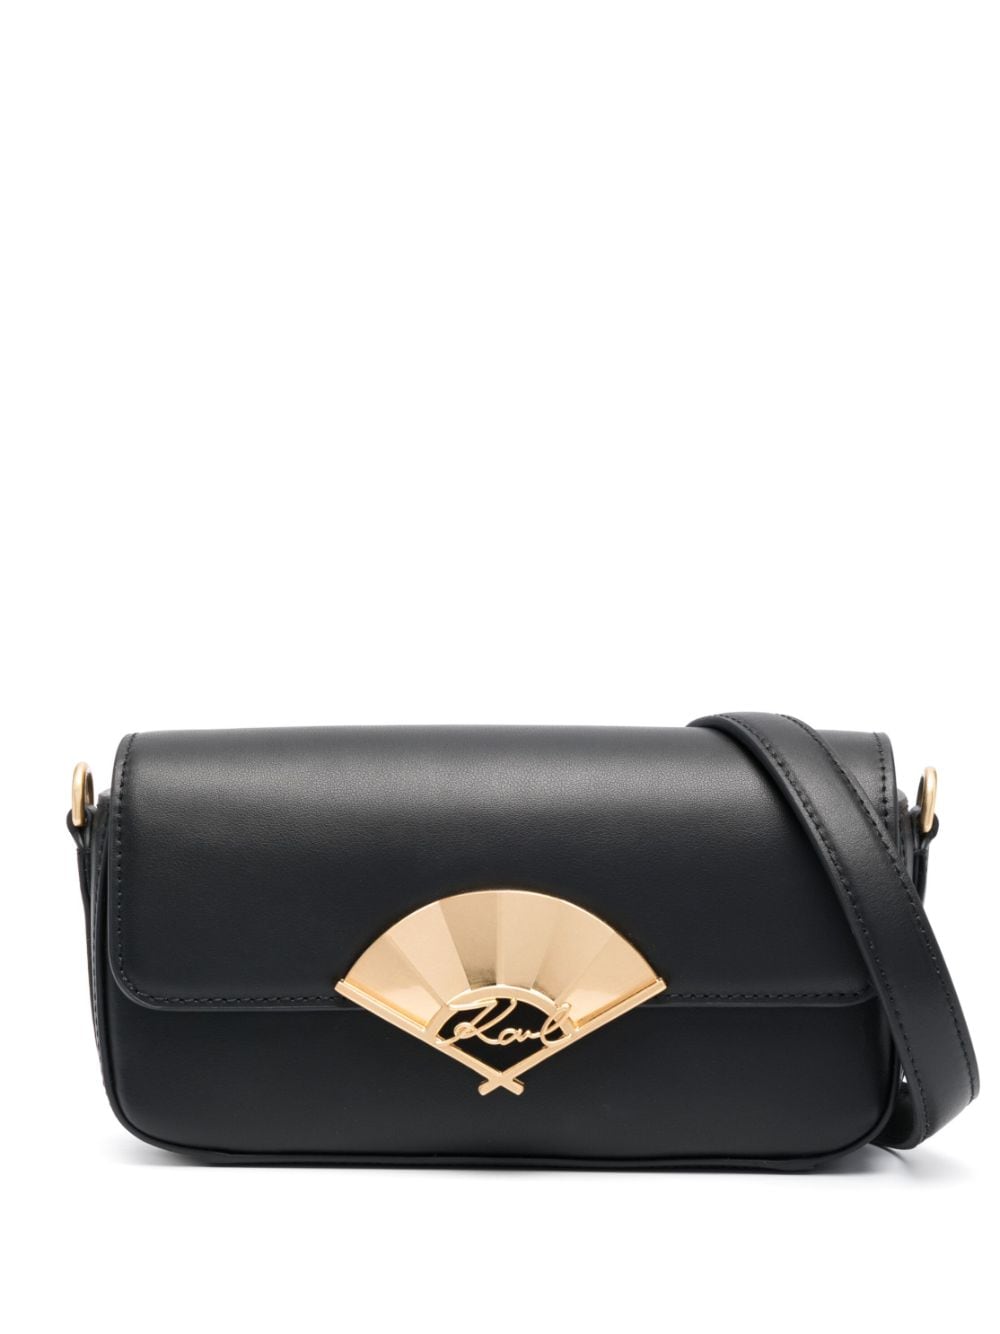 Karl Lagerfeld Signature Fan leather crossbody bag - Black von Karl Lagerfeld